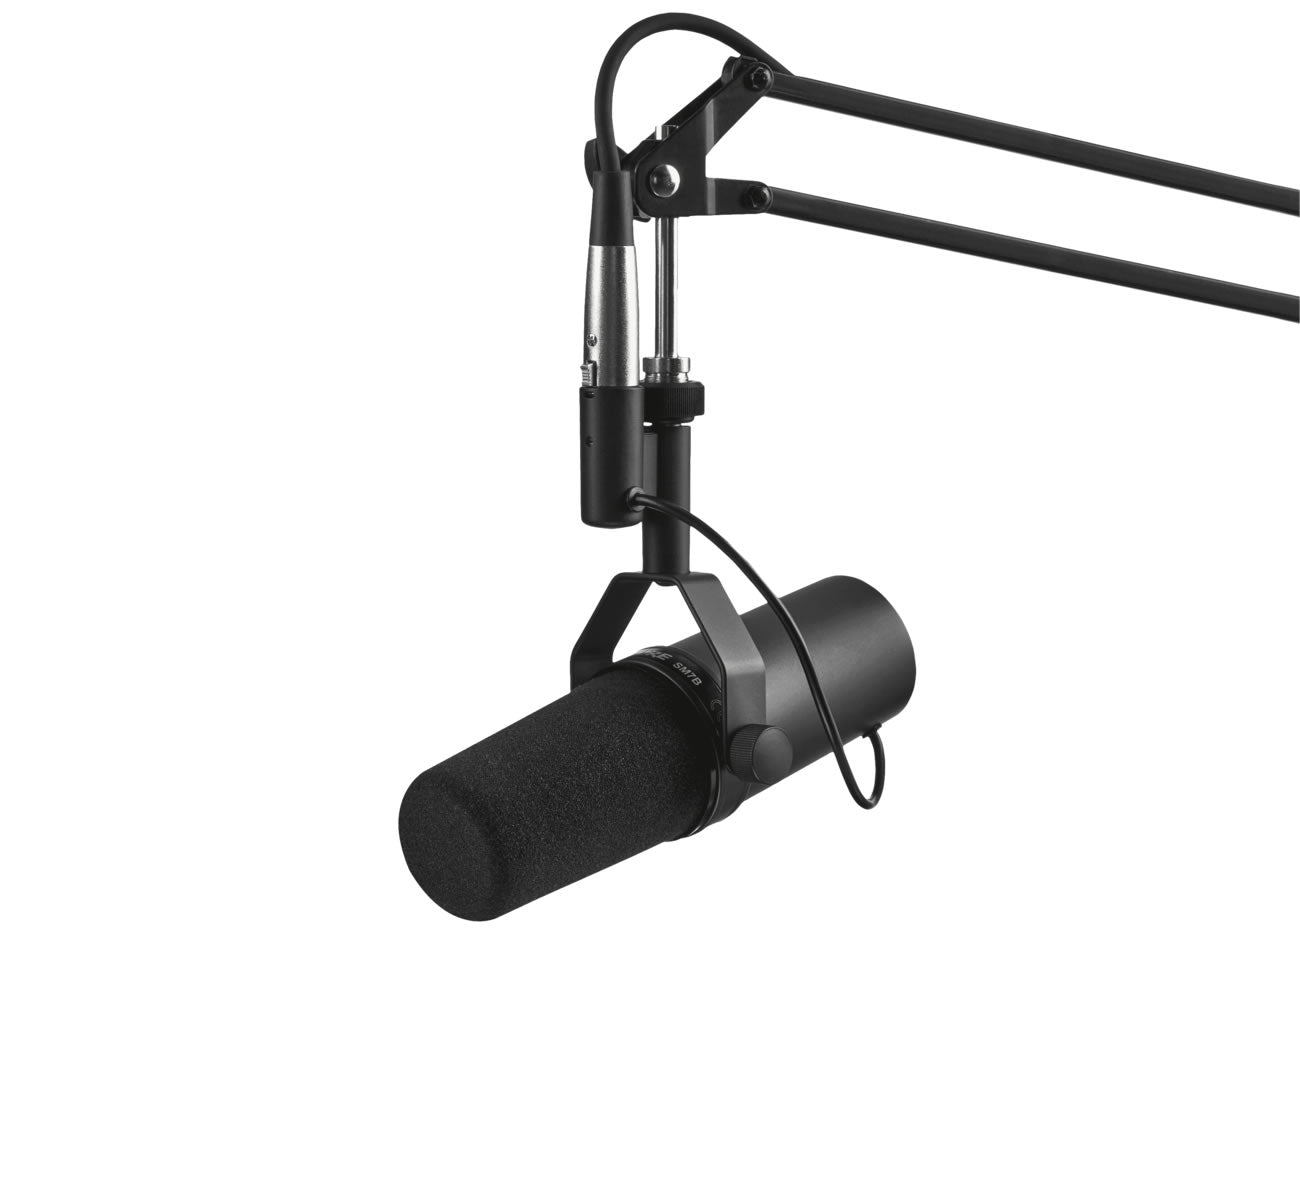 Shure SM7B Dynamic Vocal Microphone on a boom arm